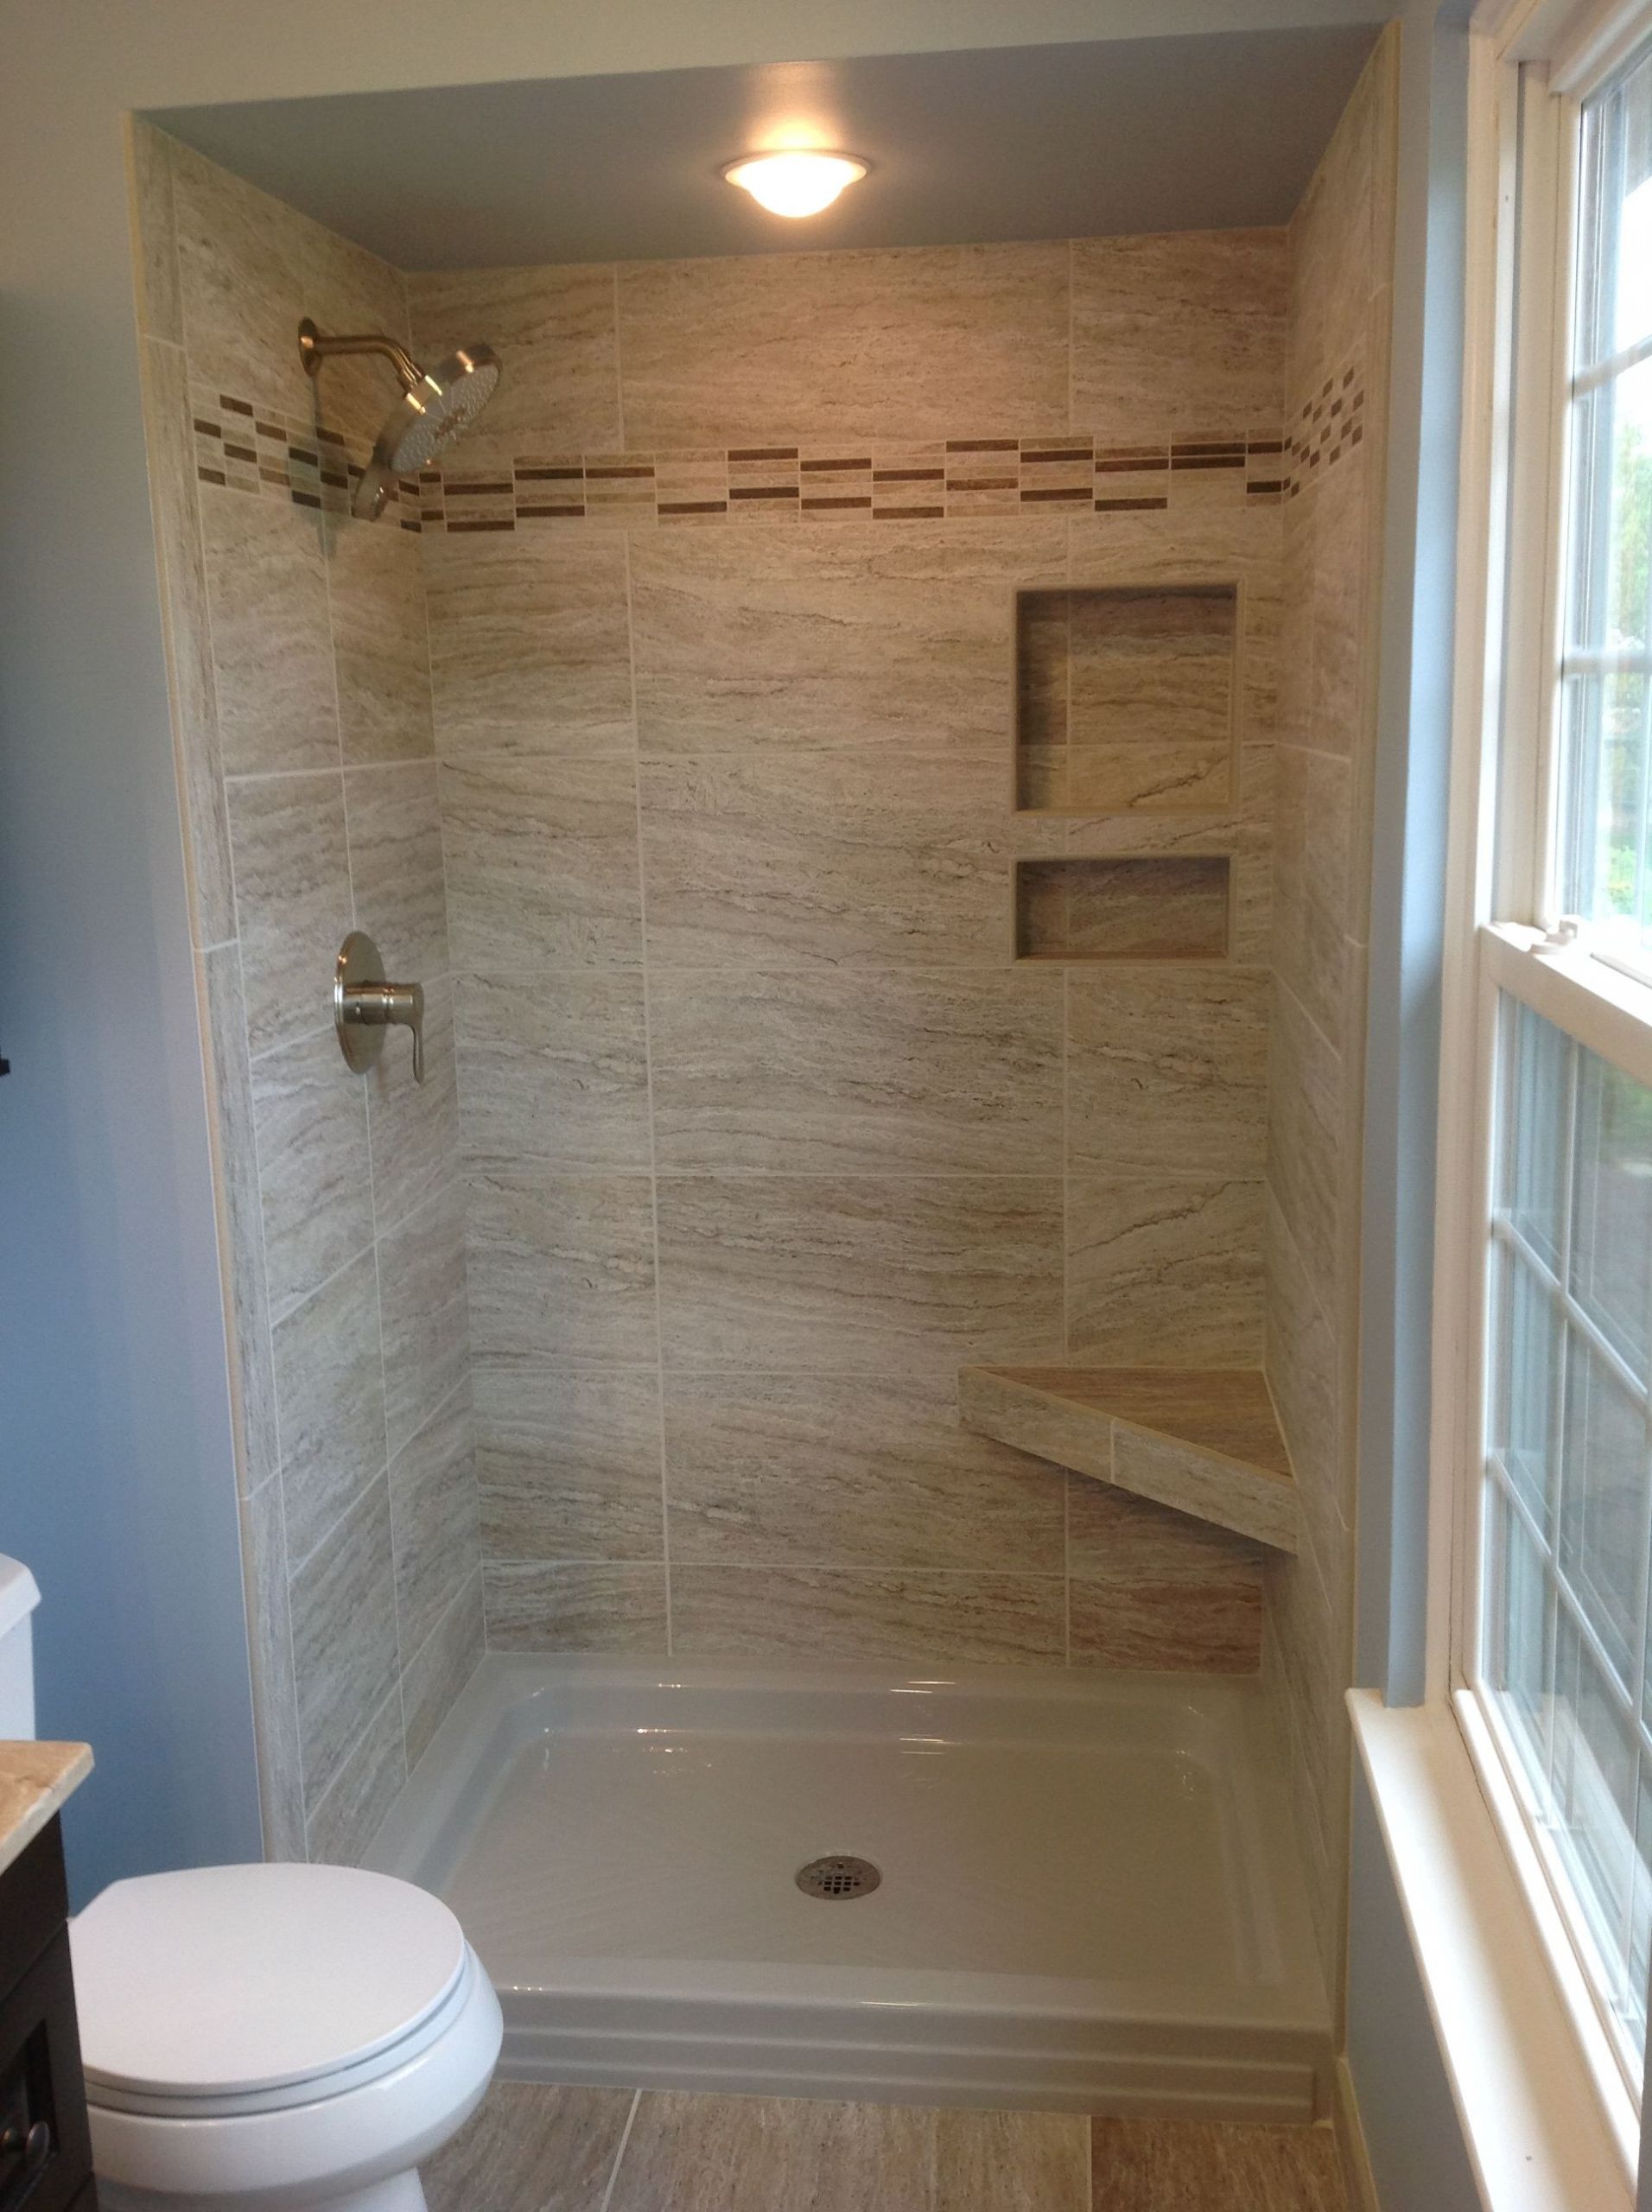 12X24 Tile In Small Bathroom
 Marazzi Silk Elegant 12x24" tiles in a 34x48" shower space